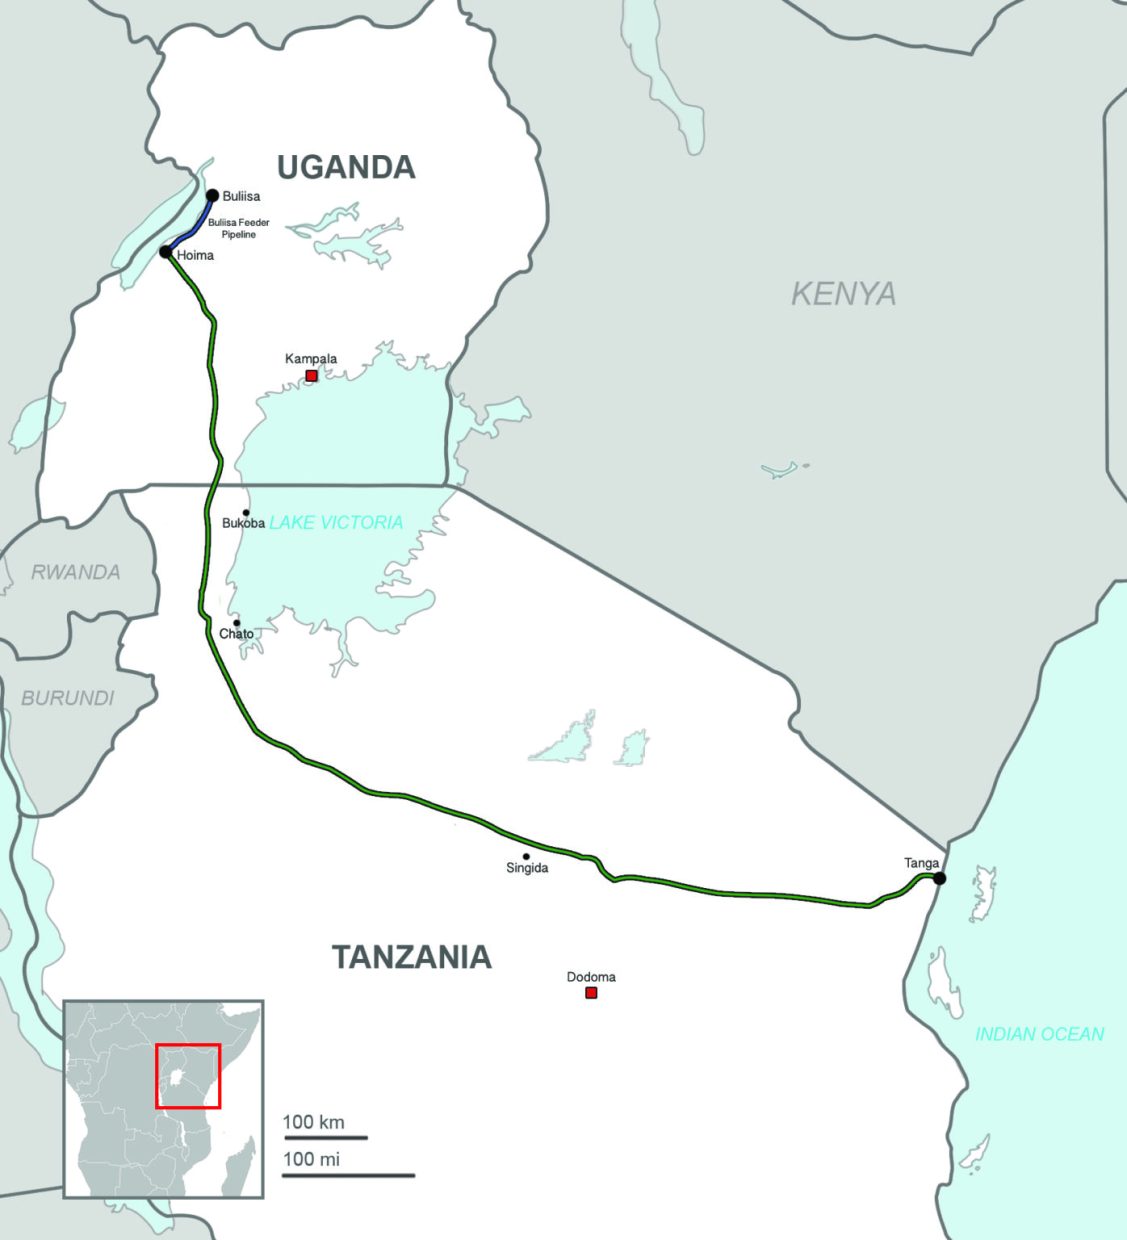 Uganda-Tanzania_Proposed_Pipeline